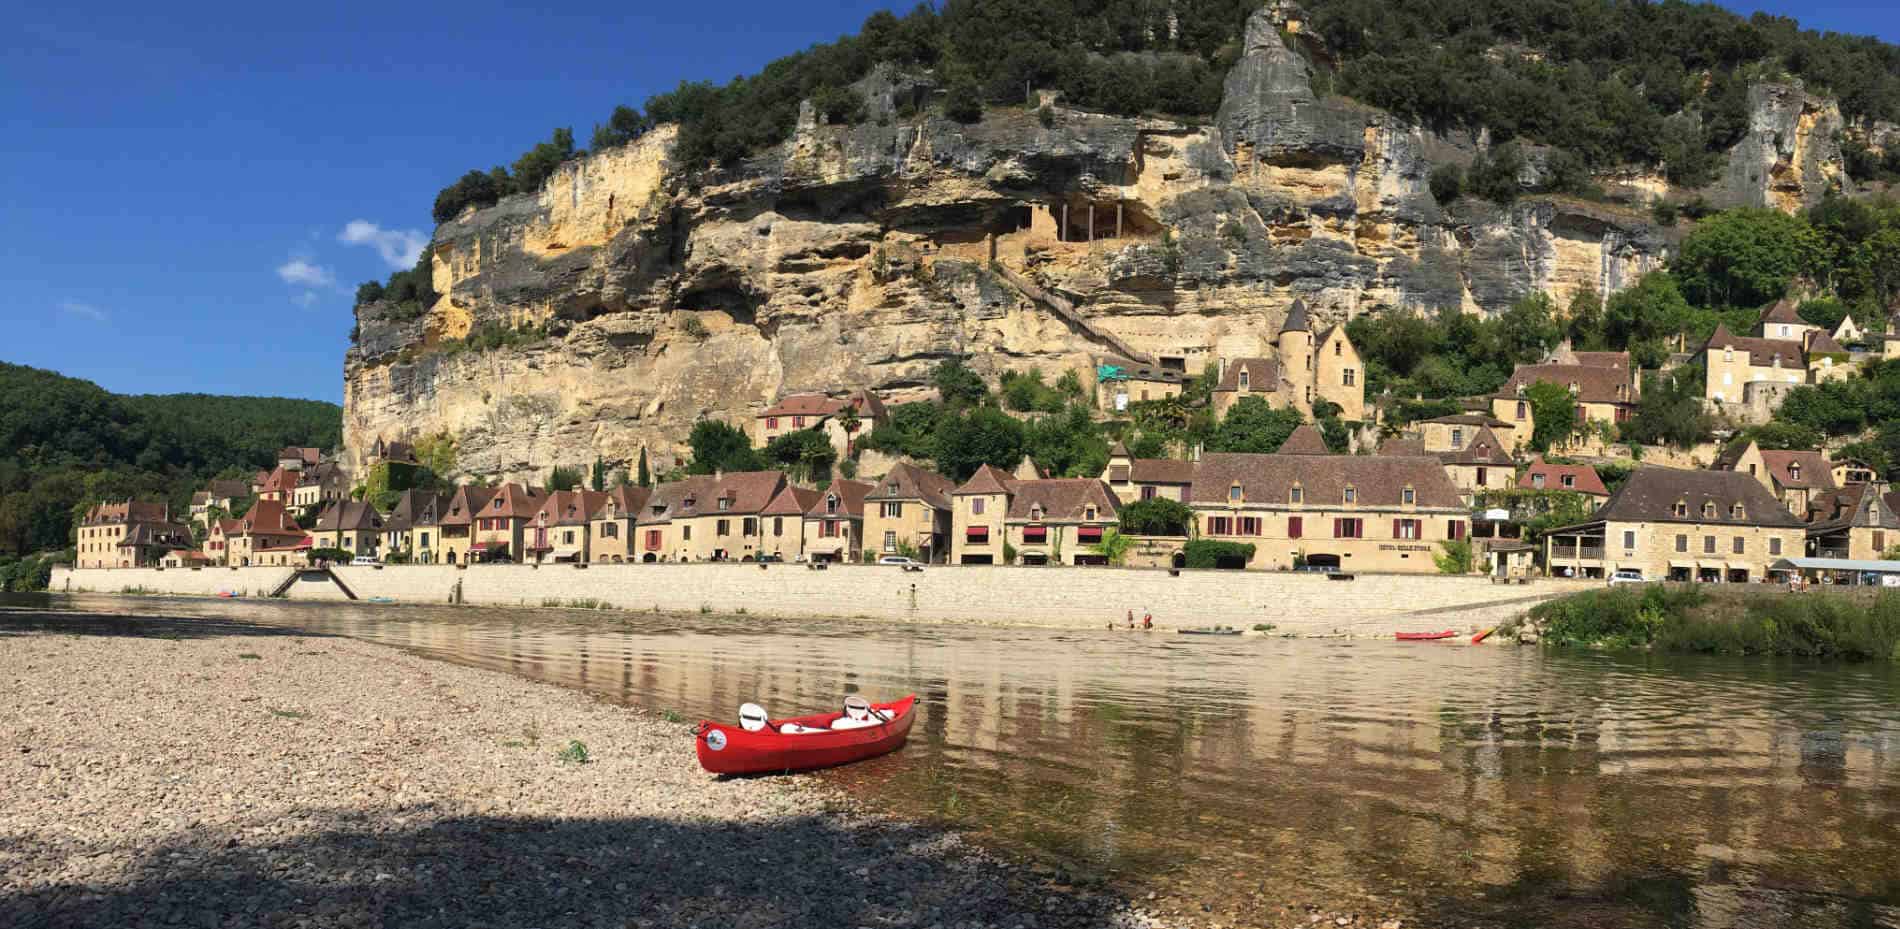 Canoe Dordogne tarif location canoe kayak sur la dordogne